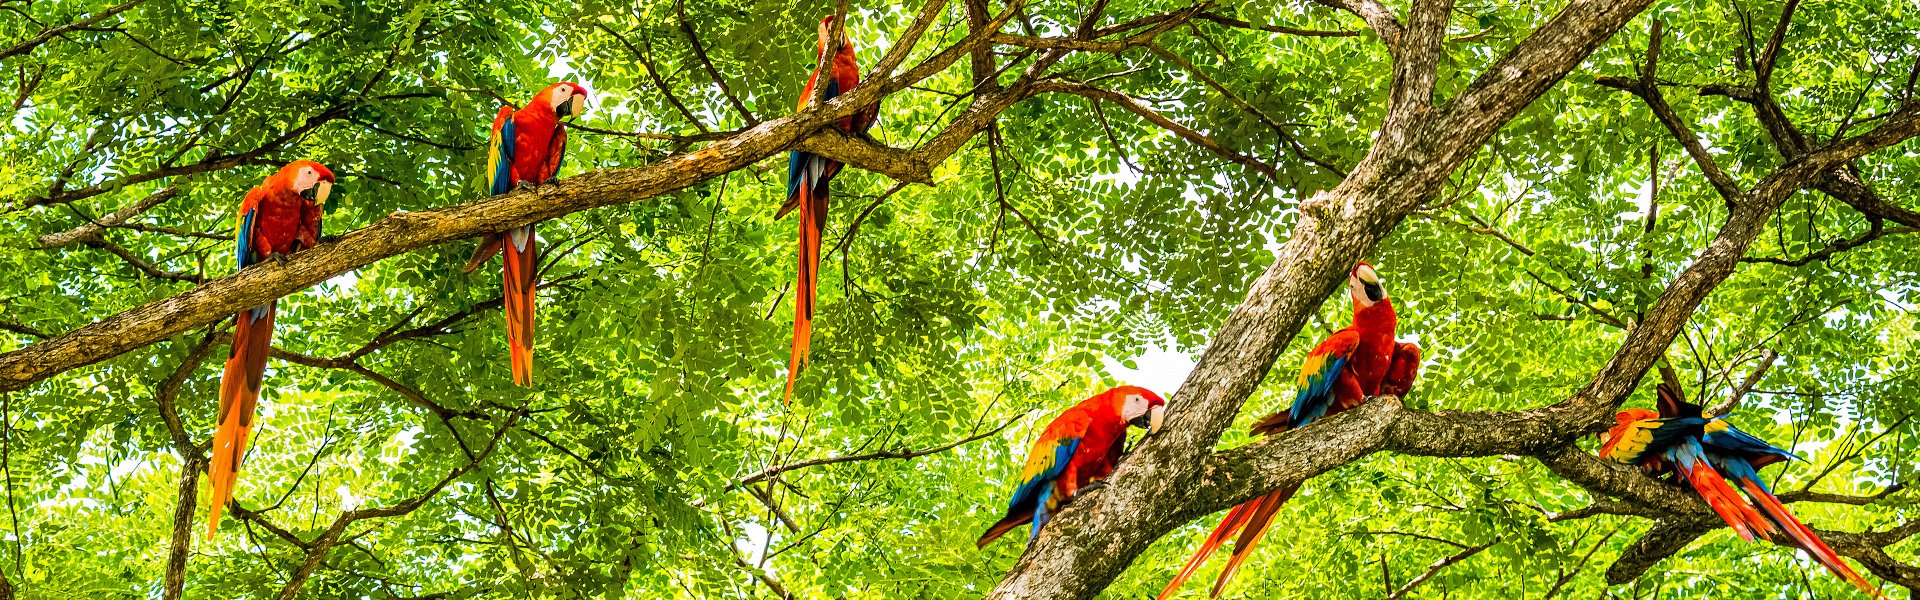 Bunte Vielfalt in Costa Rica (hier: Aras) |  OGphoto, iStockphoto.com / Chamleon